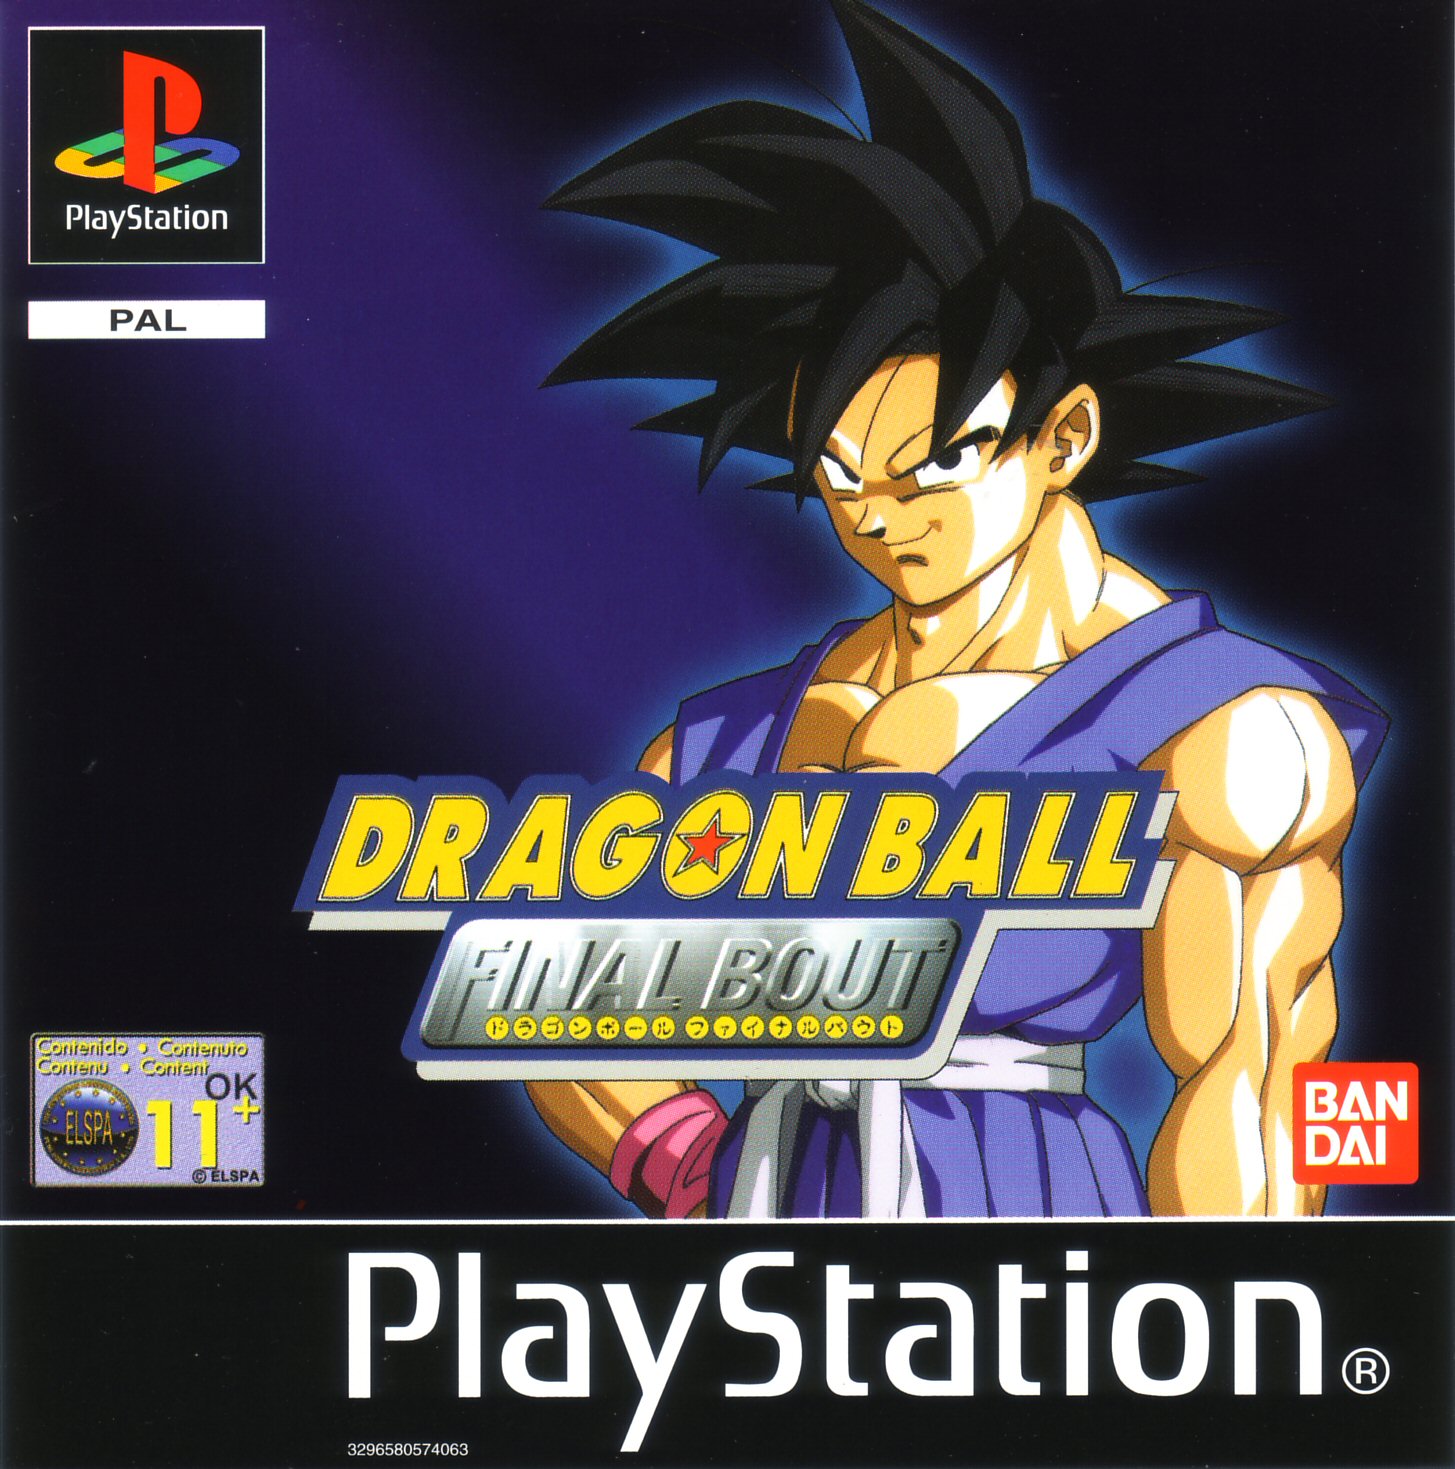 Dragon Ball Gt Final Bout Sles Rom Playstation Ps1 Emulator Games